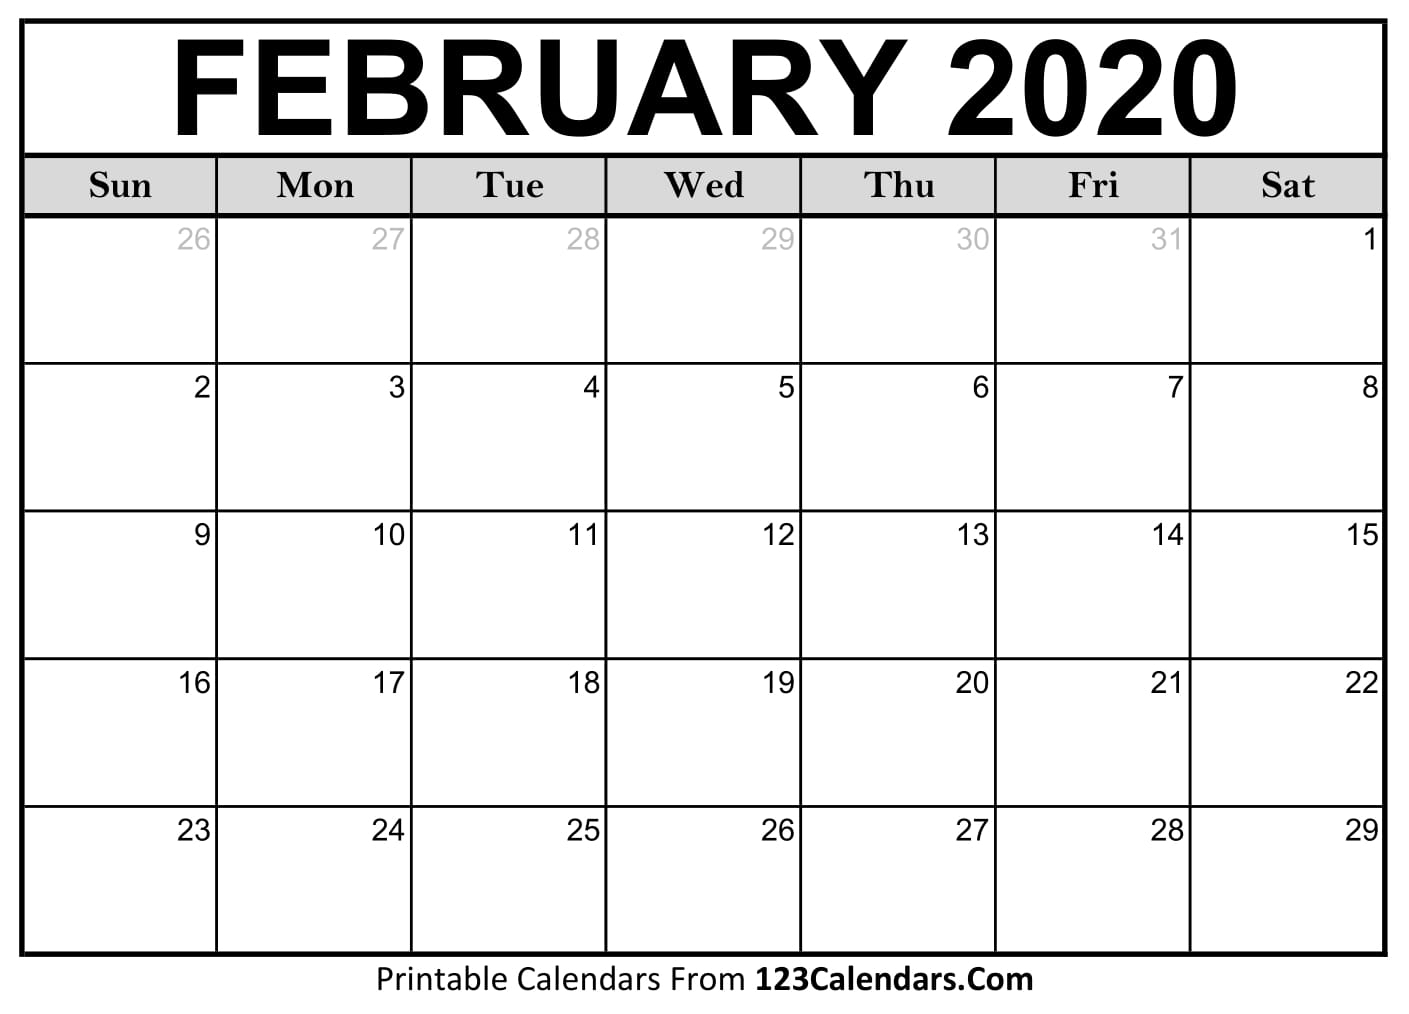 Monthly Calendar February 2020 Printable  Bolan with February 2020 Daily Calendar